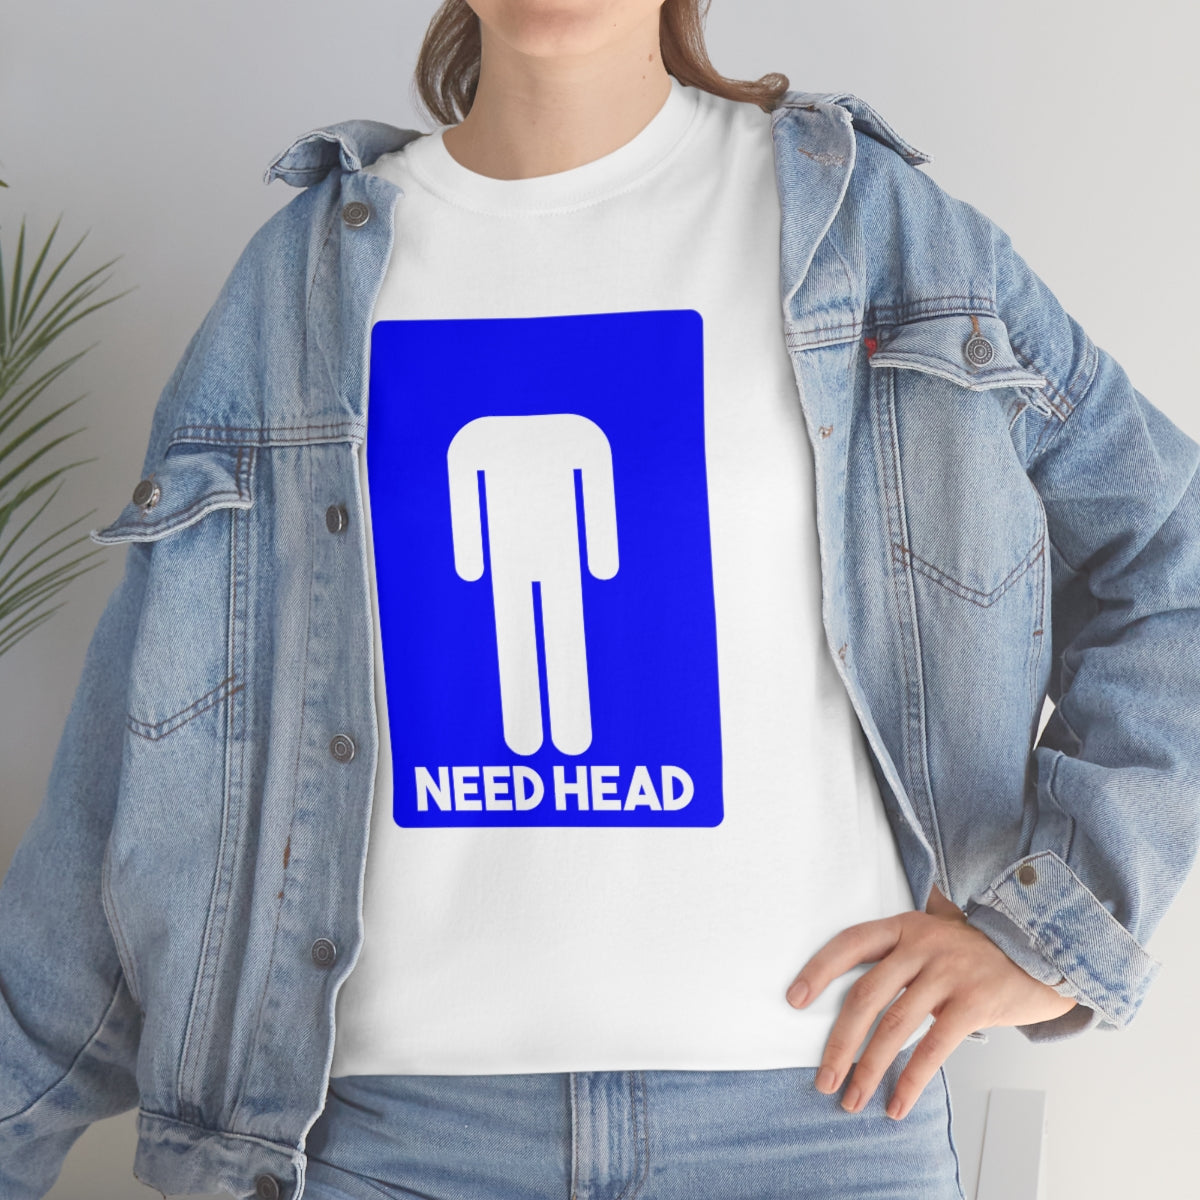 NEED HEAD T-SHIRT